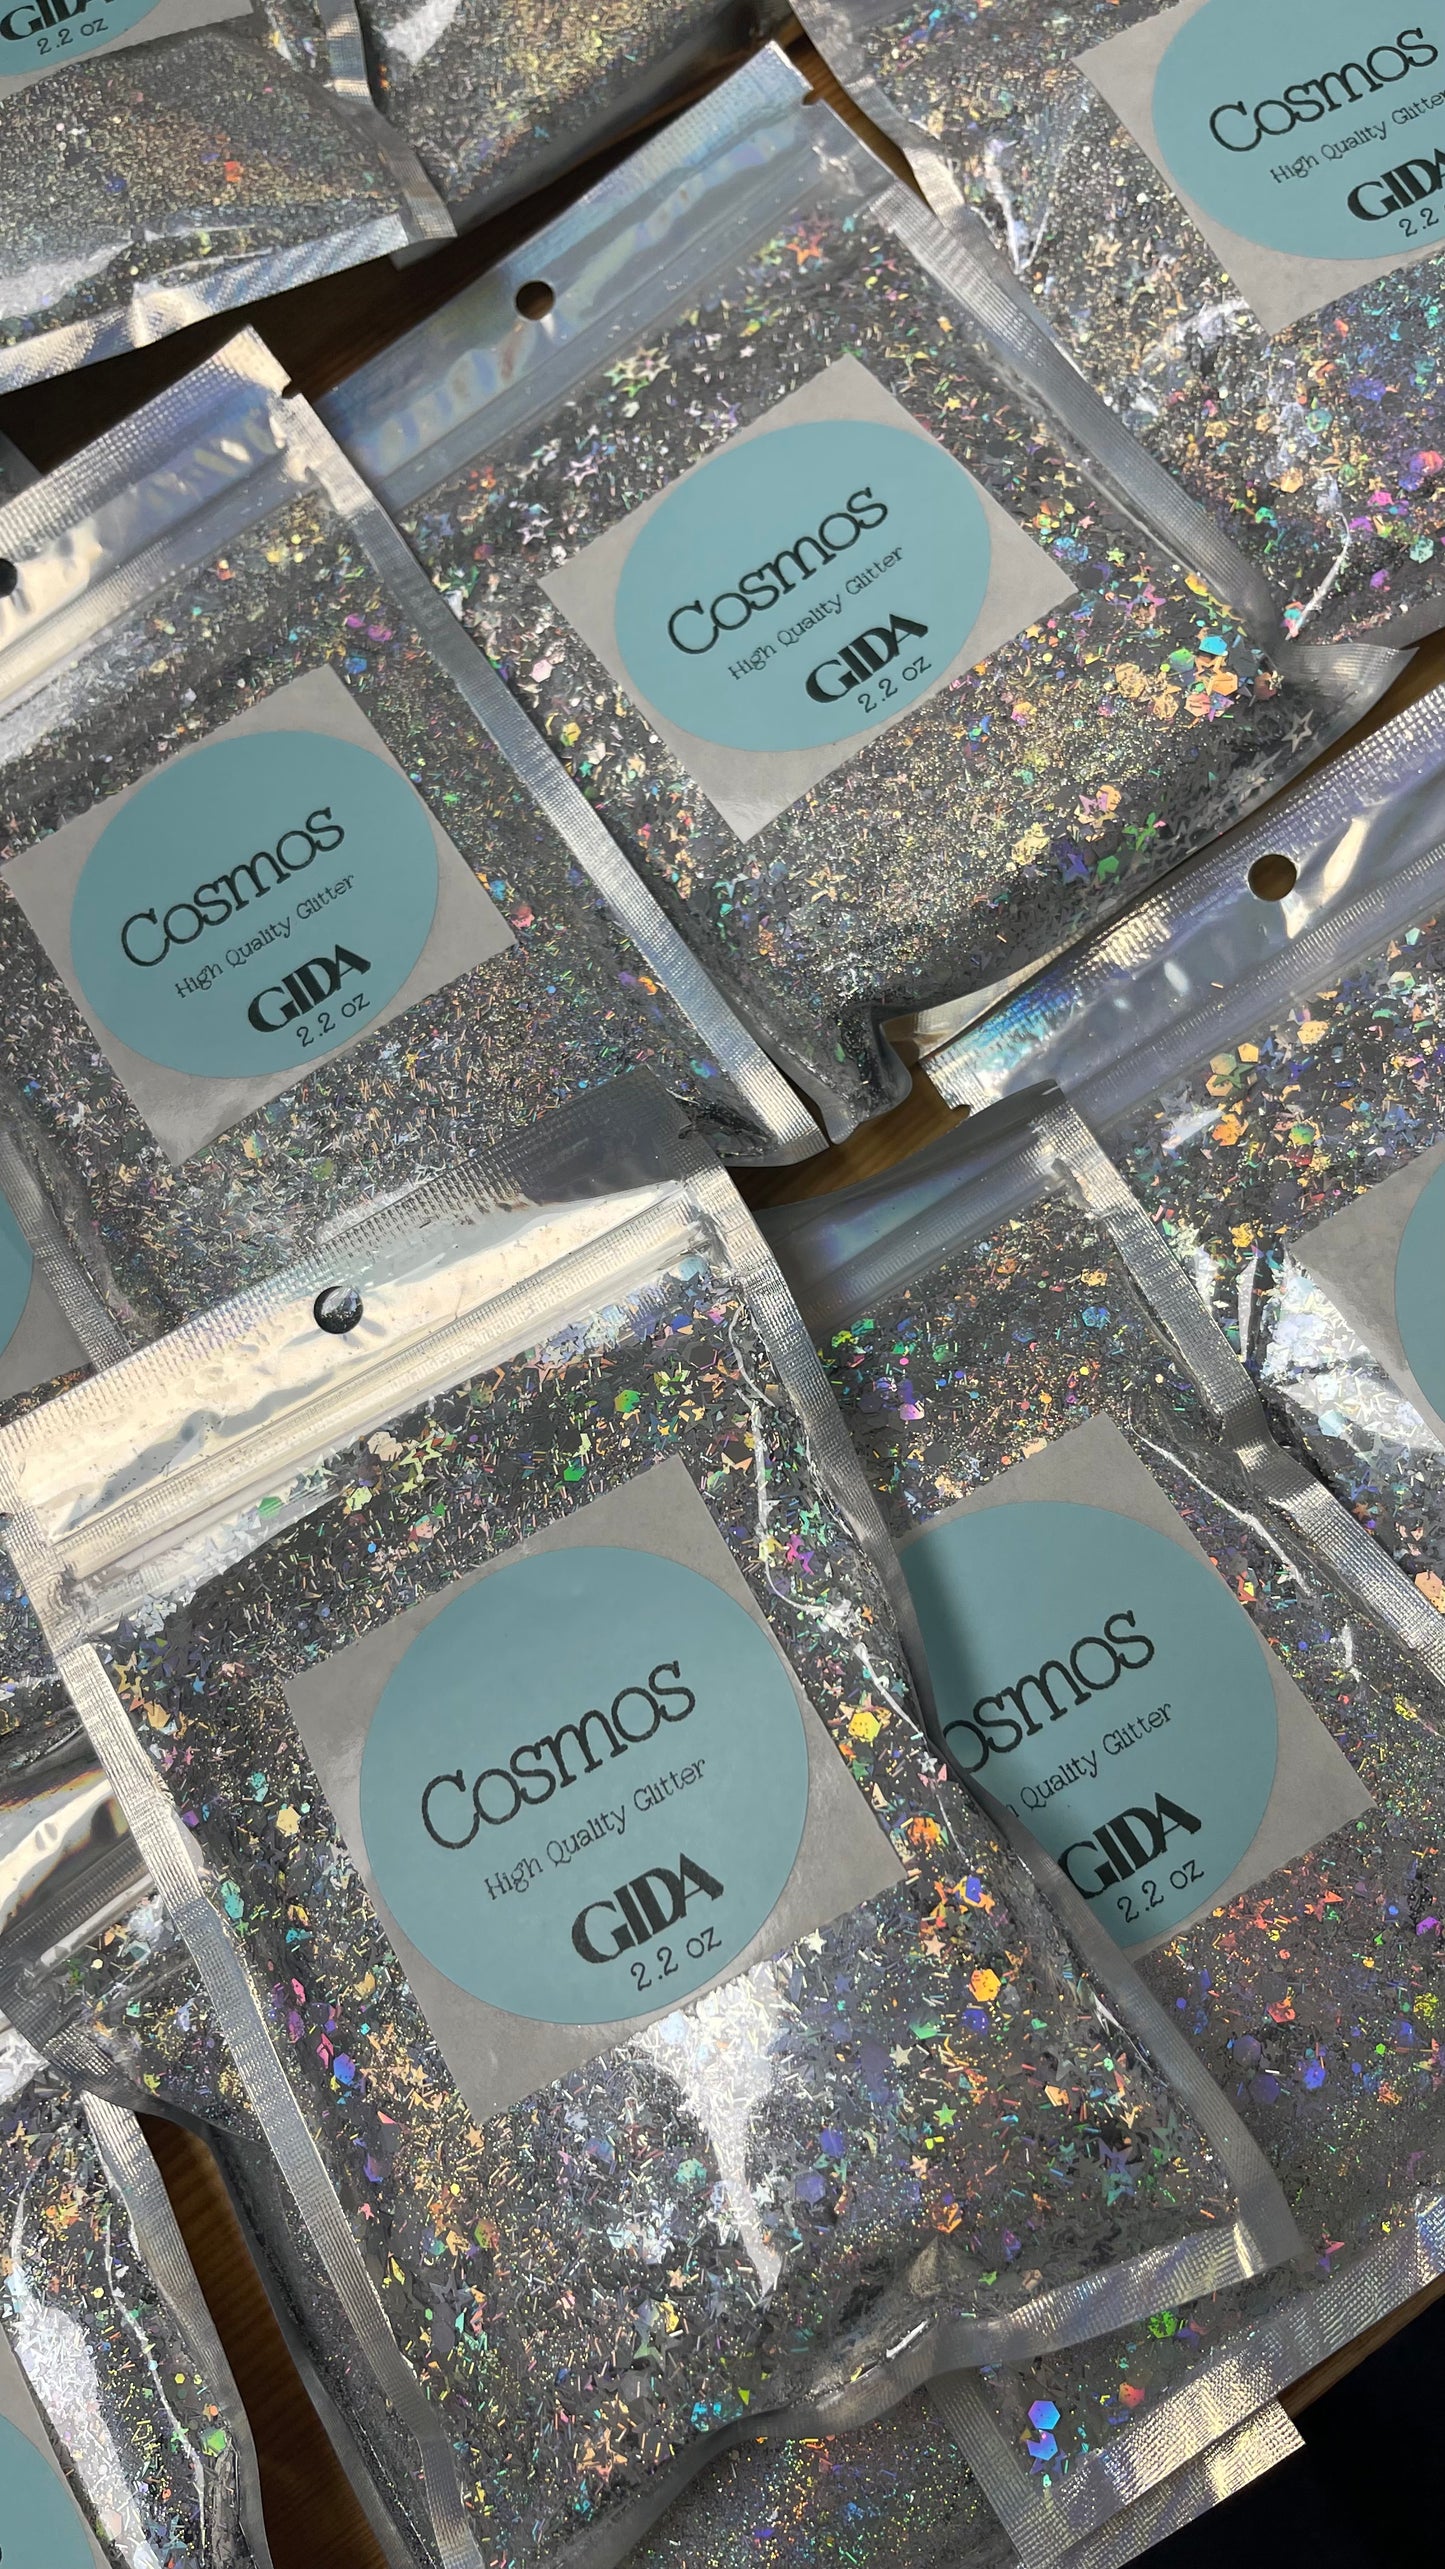 Cosmos Chunky Glitter - 2.2 oz - GIDA DESIGN 